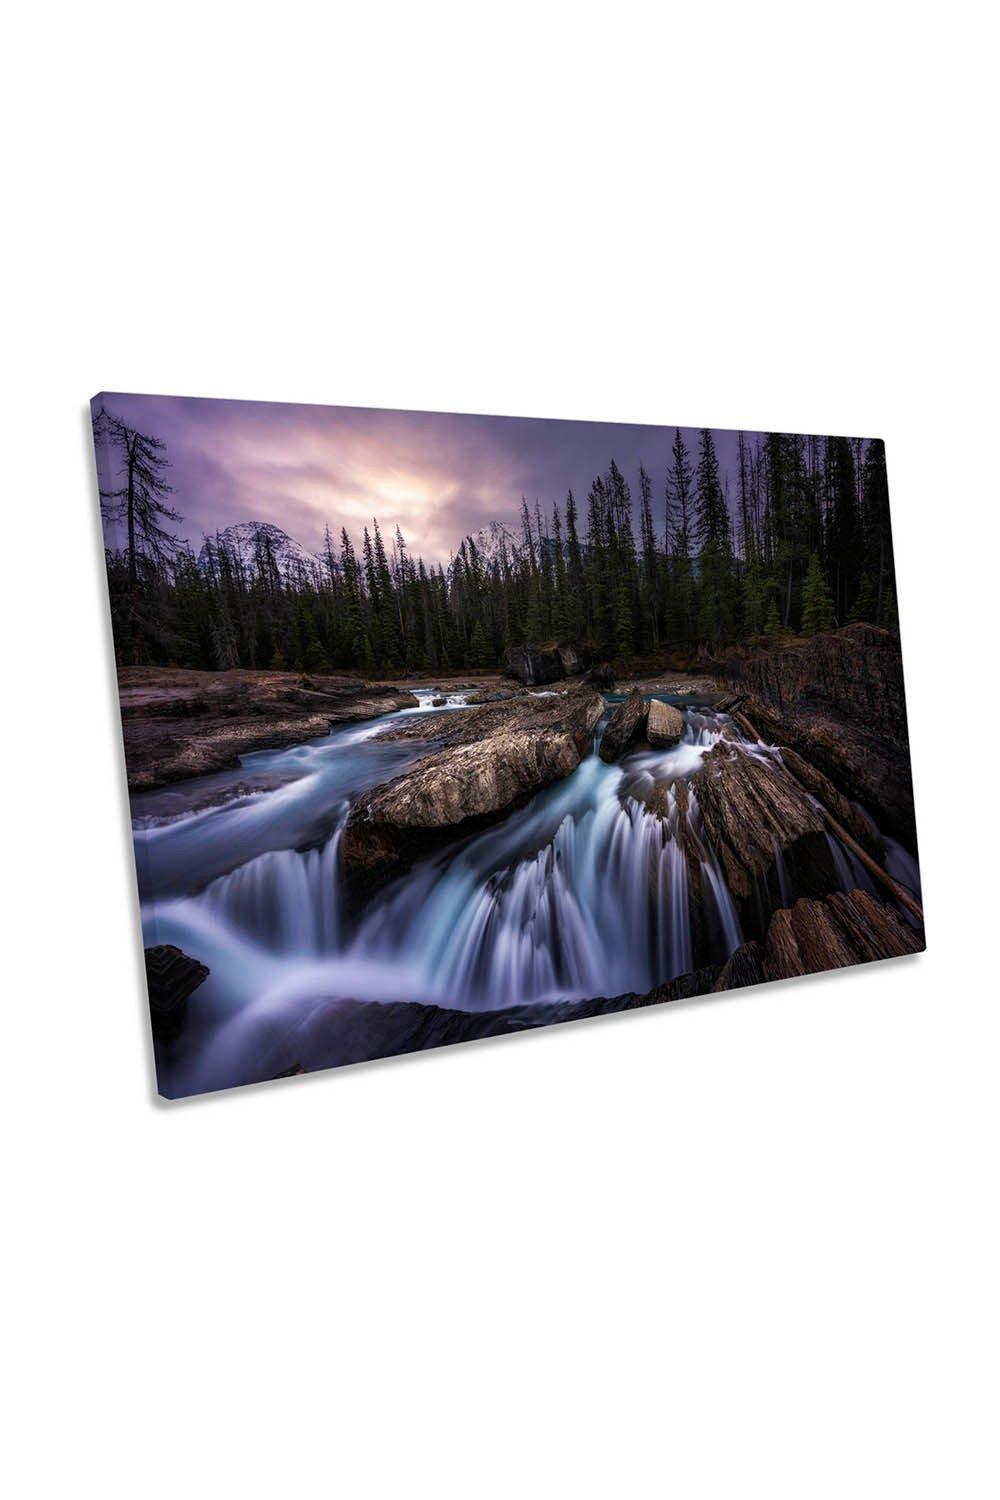 Yoho Creek Stream Canada River Waterfall Canvas Wall Art Picture Print